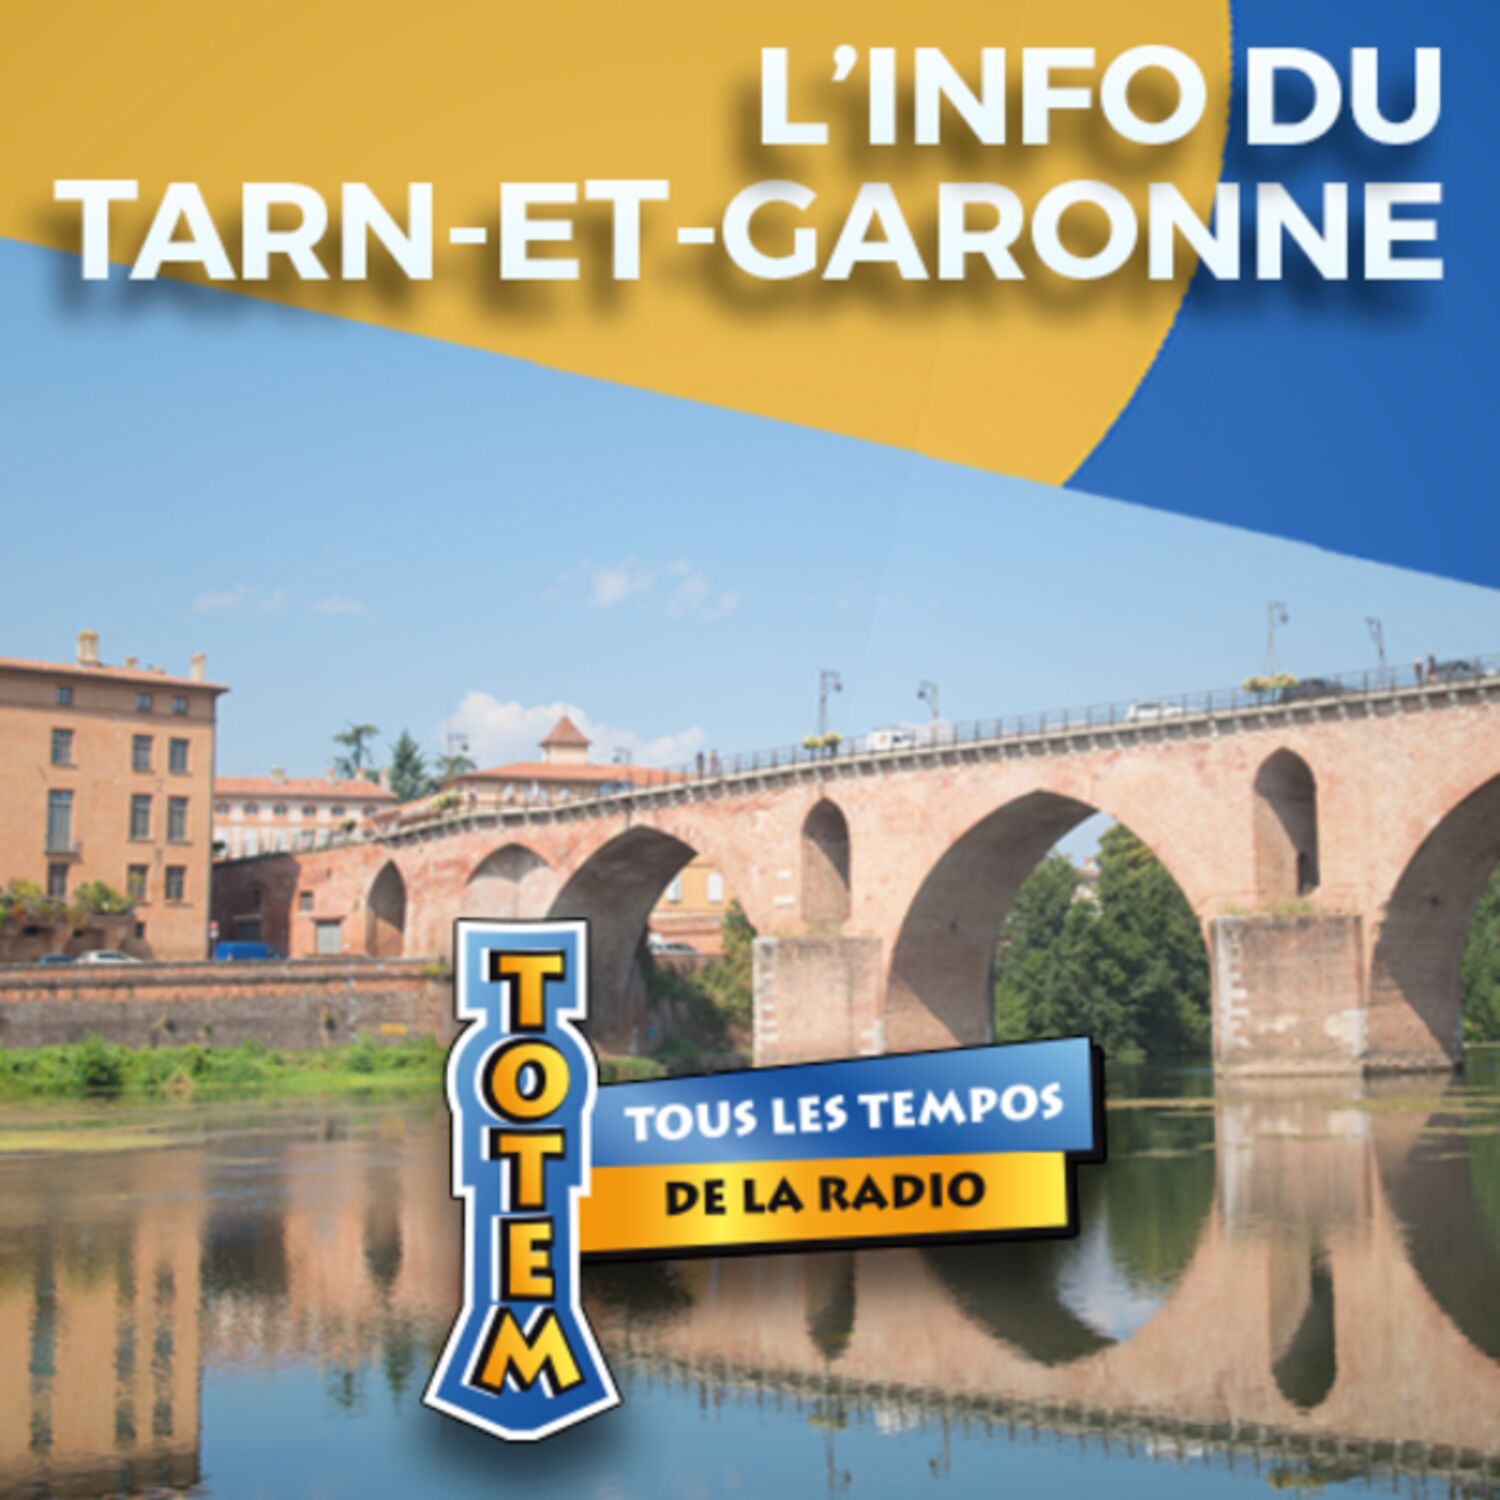 L'info du Tarn-et-Garonne du 06/04/23 à 05h59